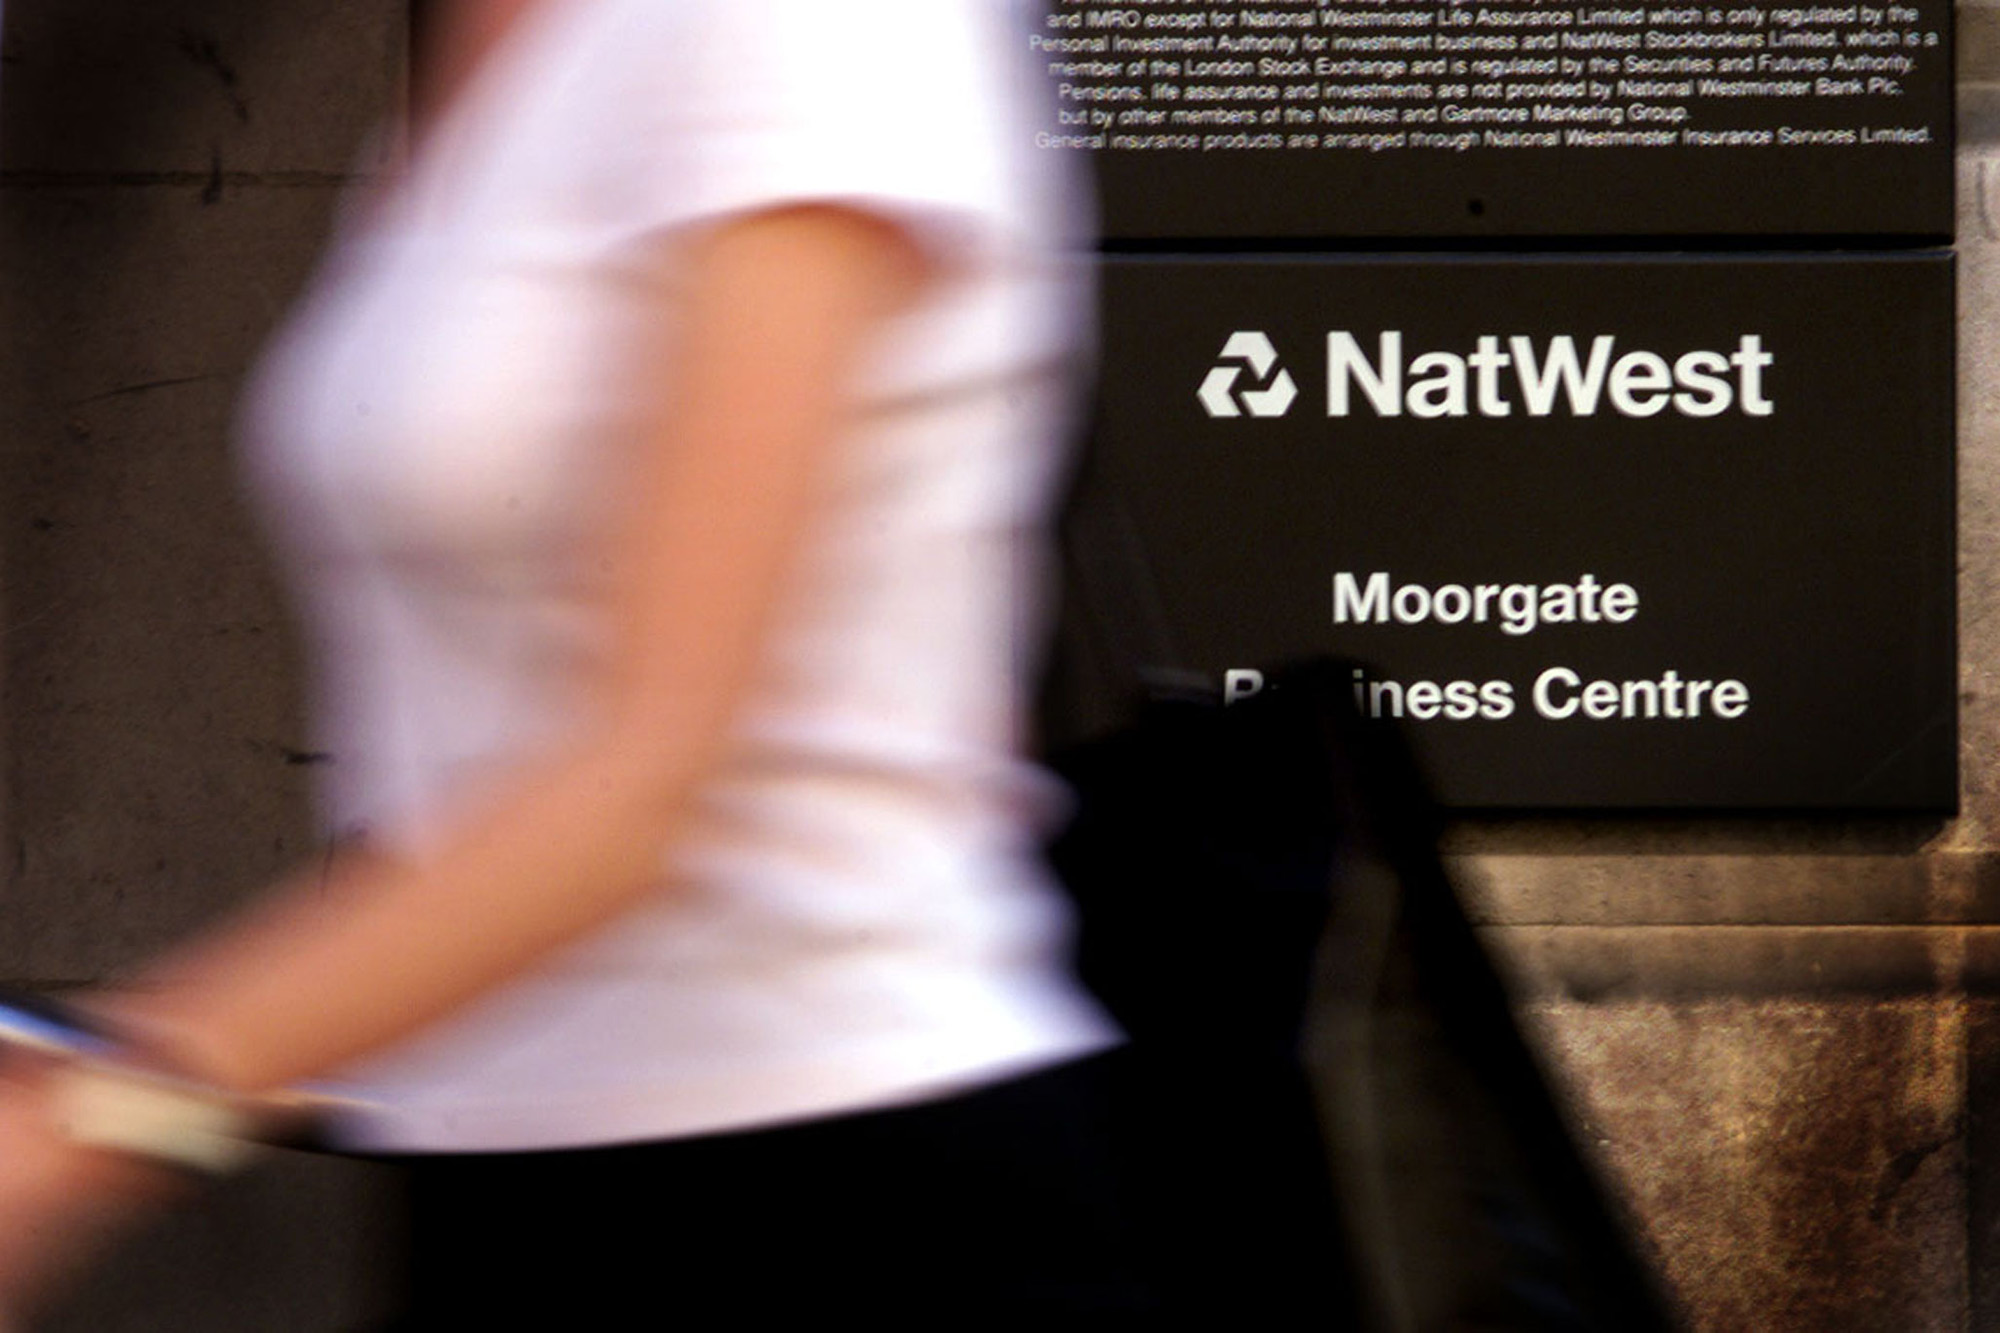 A woman walks past a NatWest bank branch